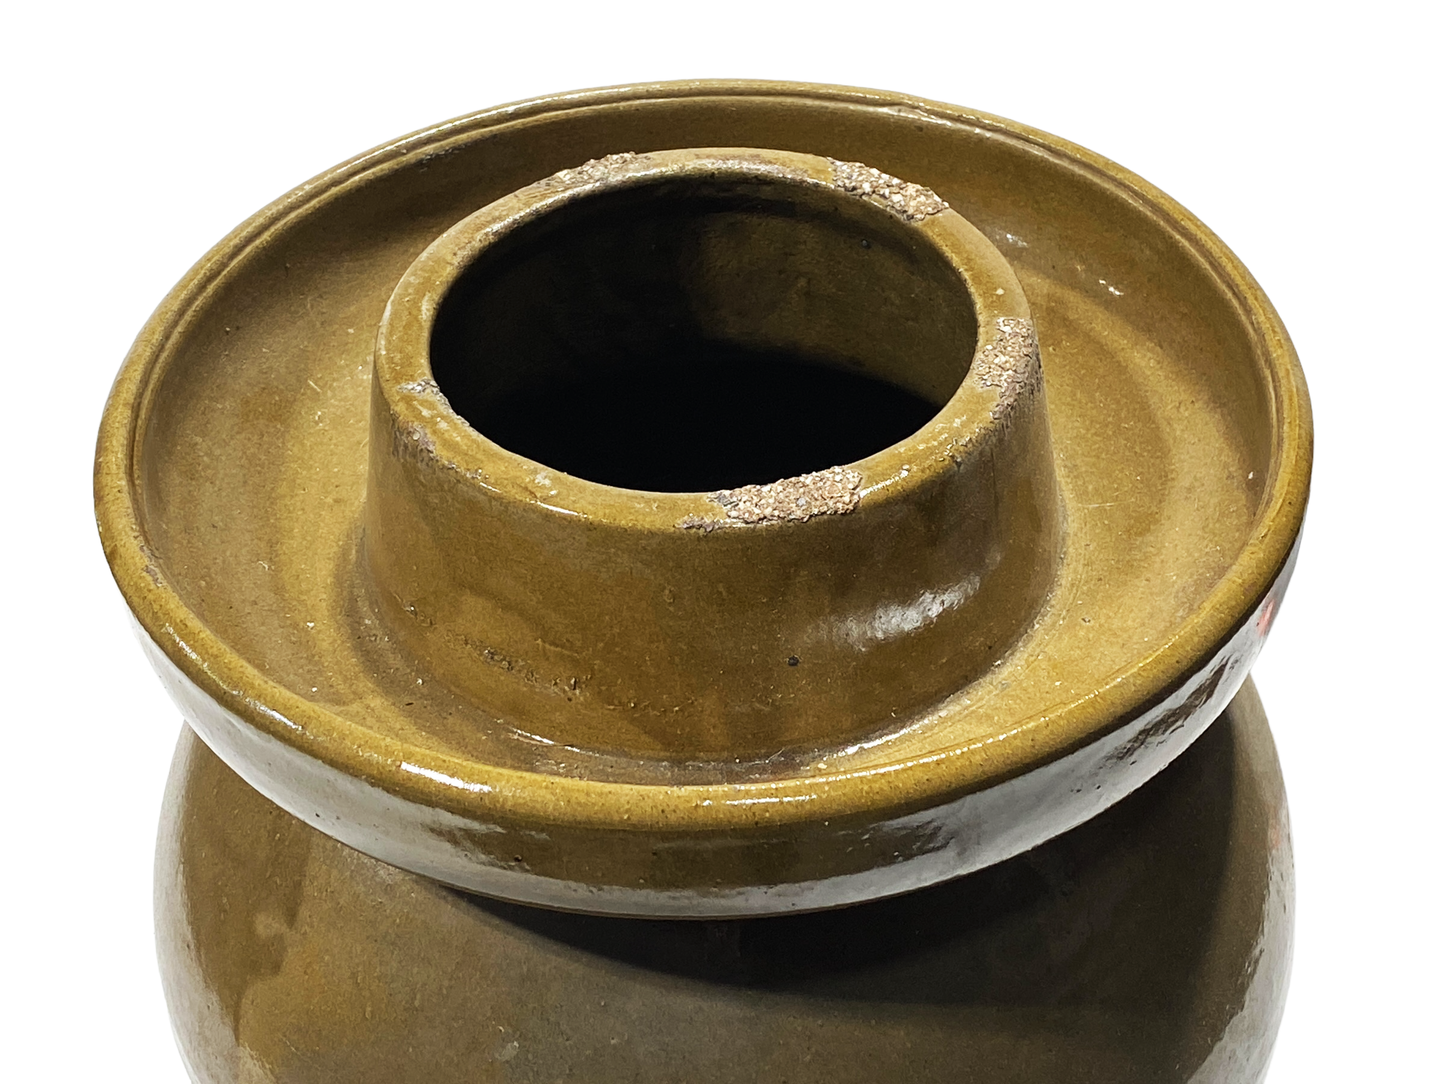 #4993 Old Asian Celadon Earthenware Pottery Storage Jar 13" H